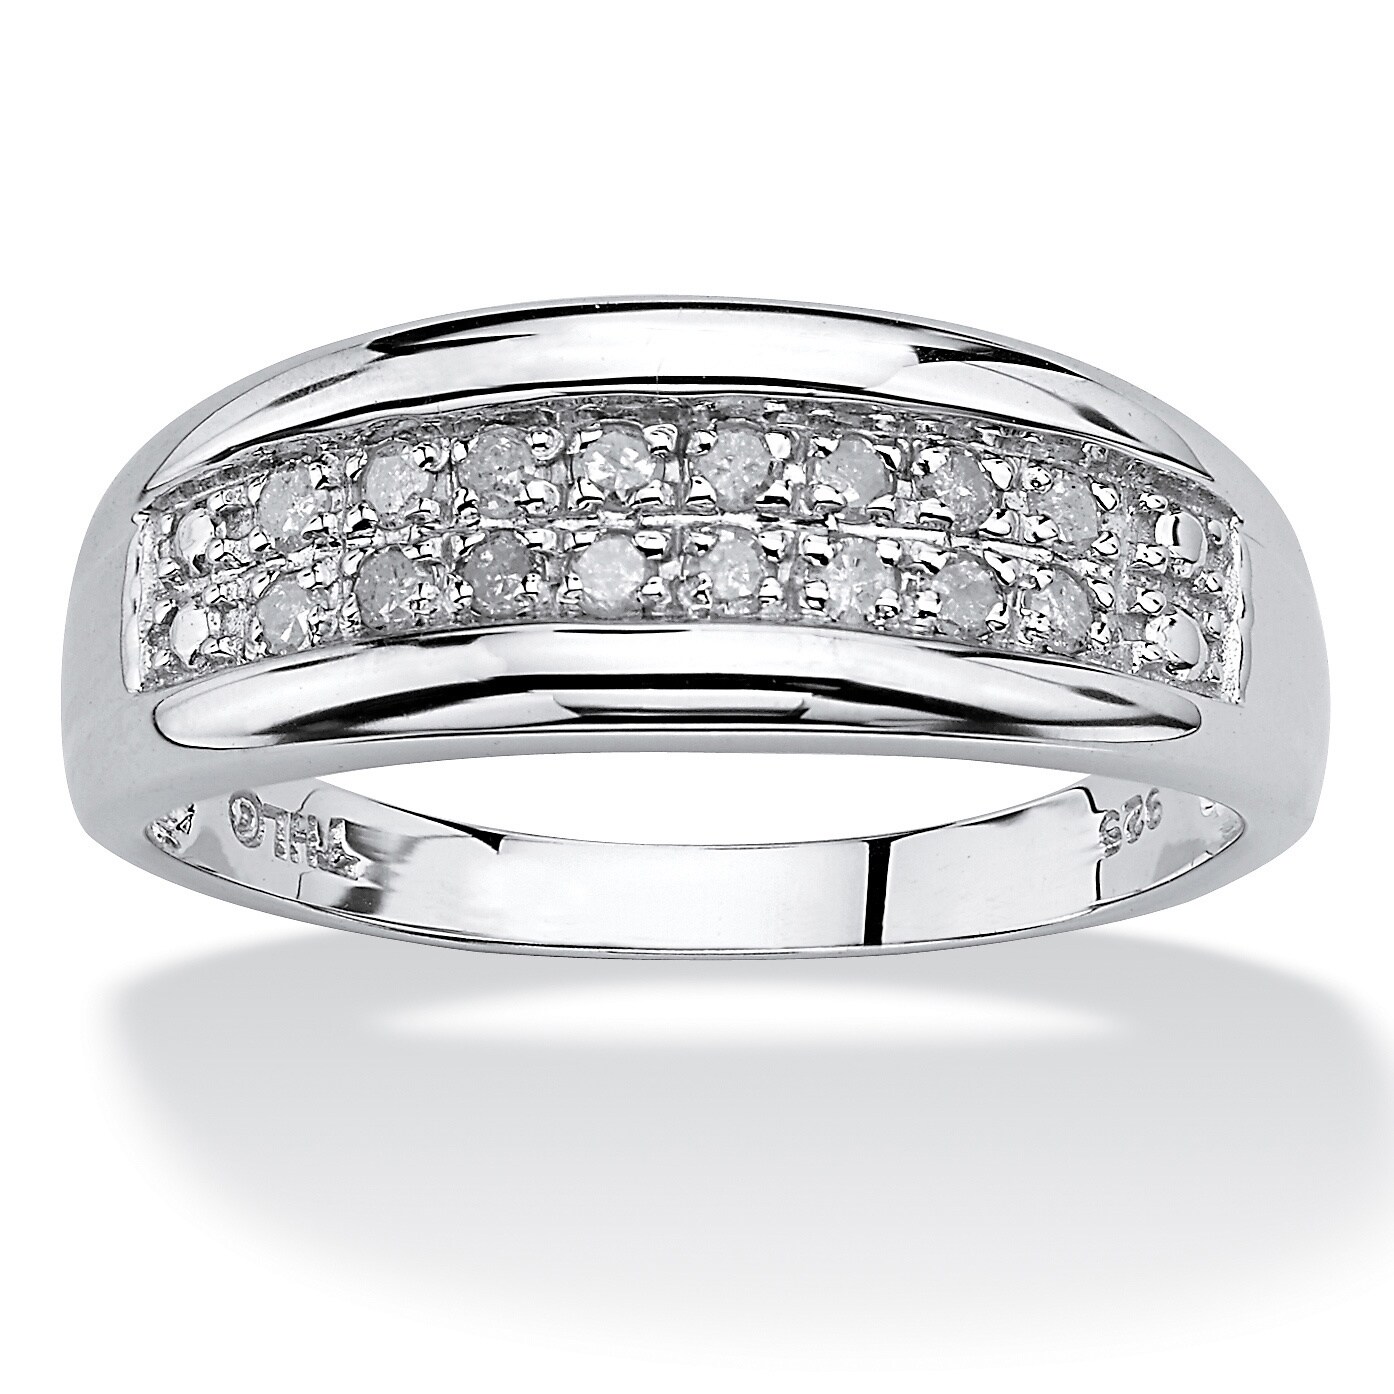 Pave Diamond Rings Buy Engagement Rings, Anniversary